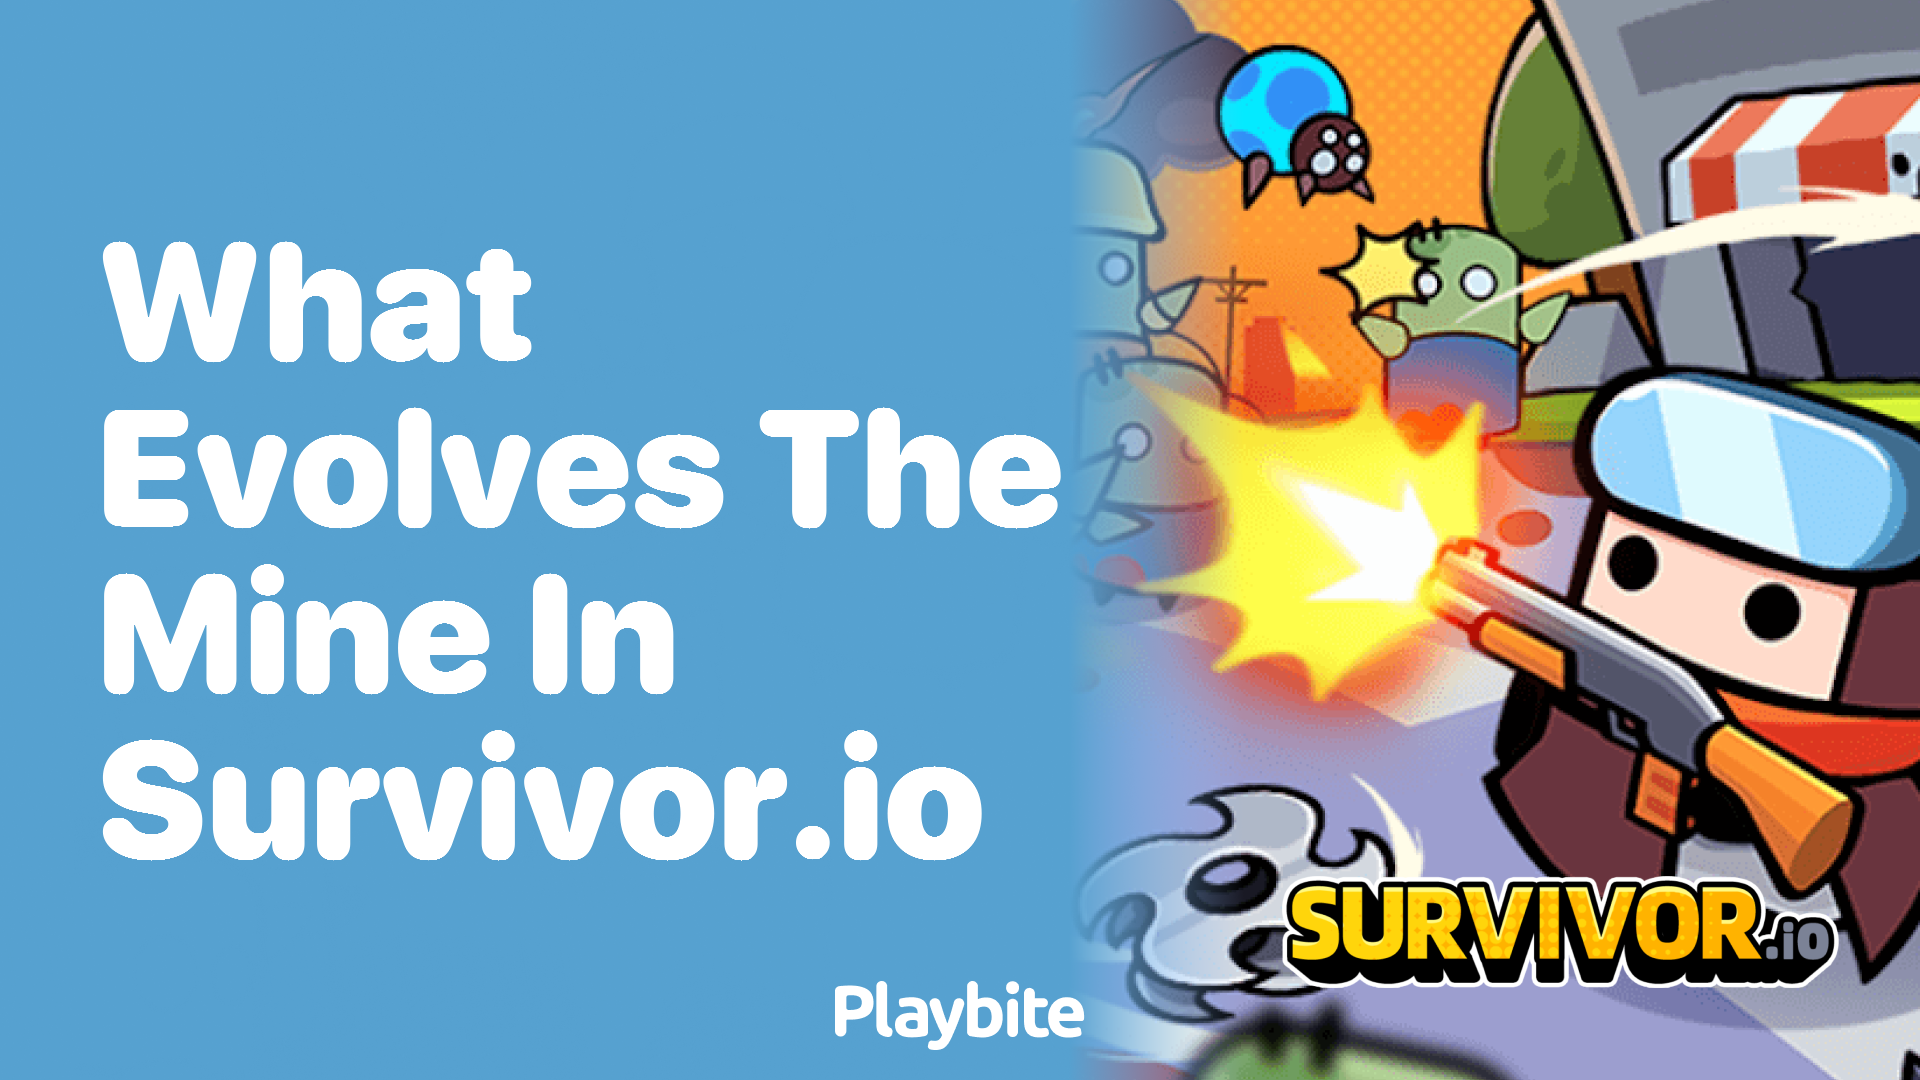 What Evolves the Mine in Survivor.io?